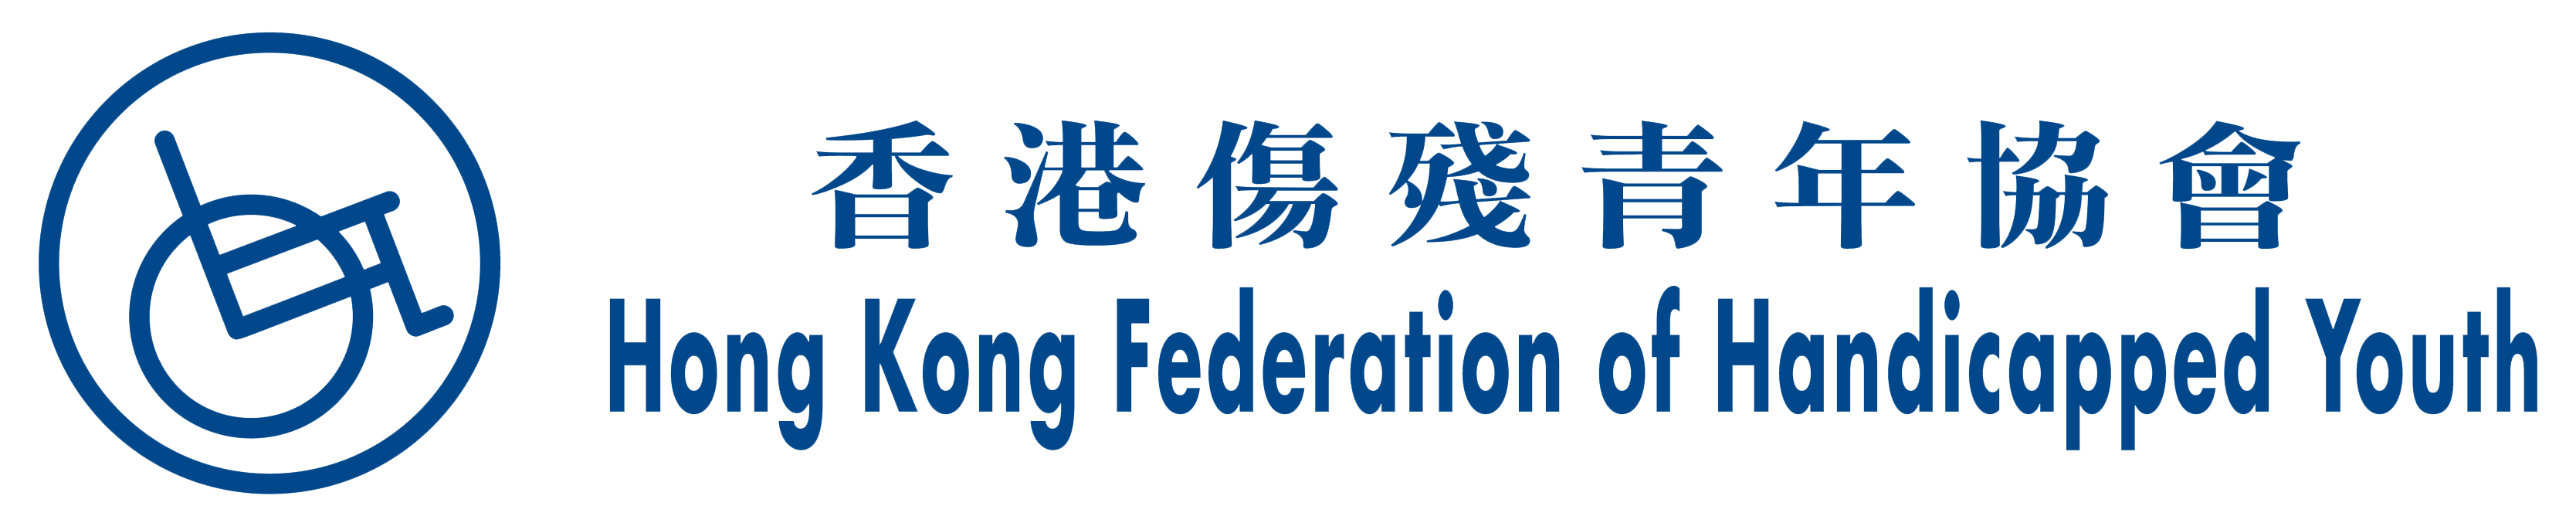 Hong Kong Federation of Handicapped Youth 香港傷殘青年協會